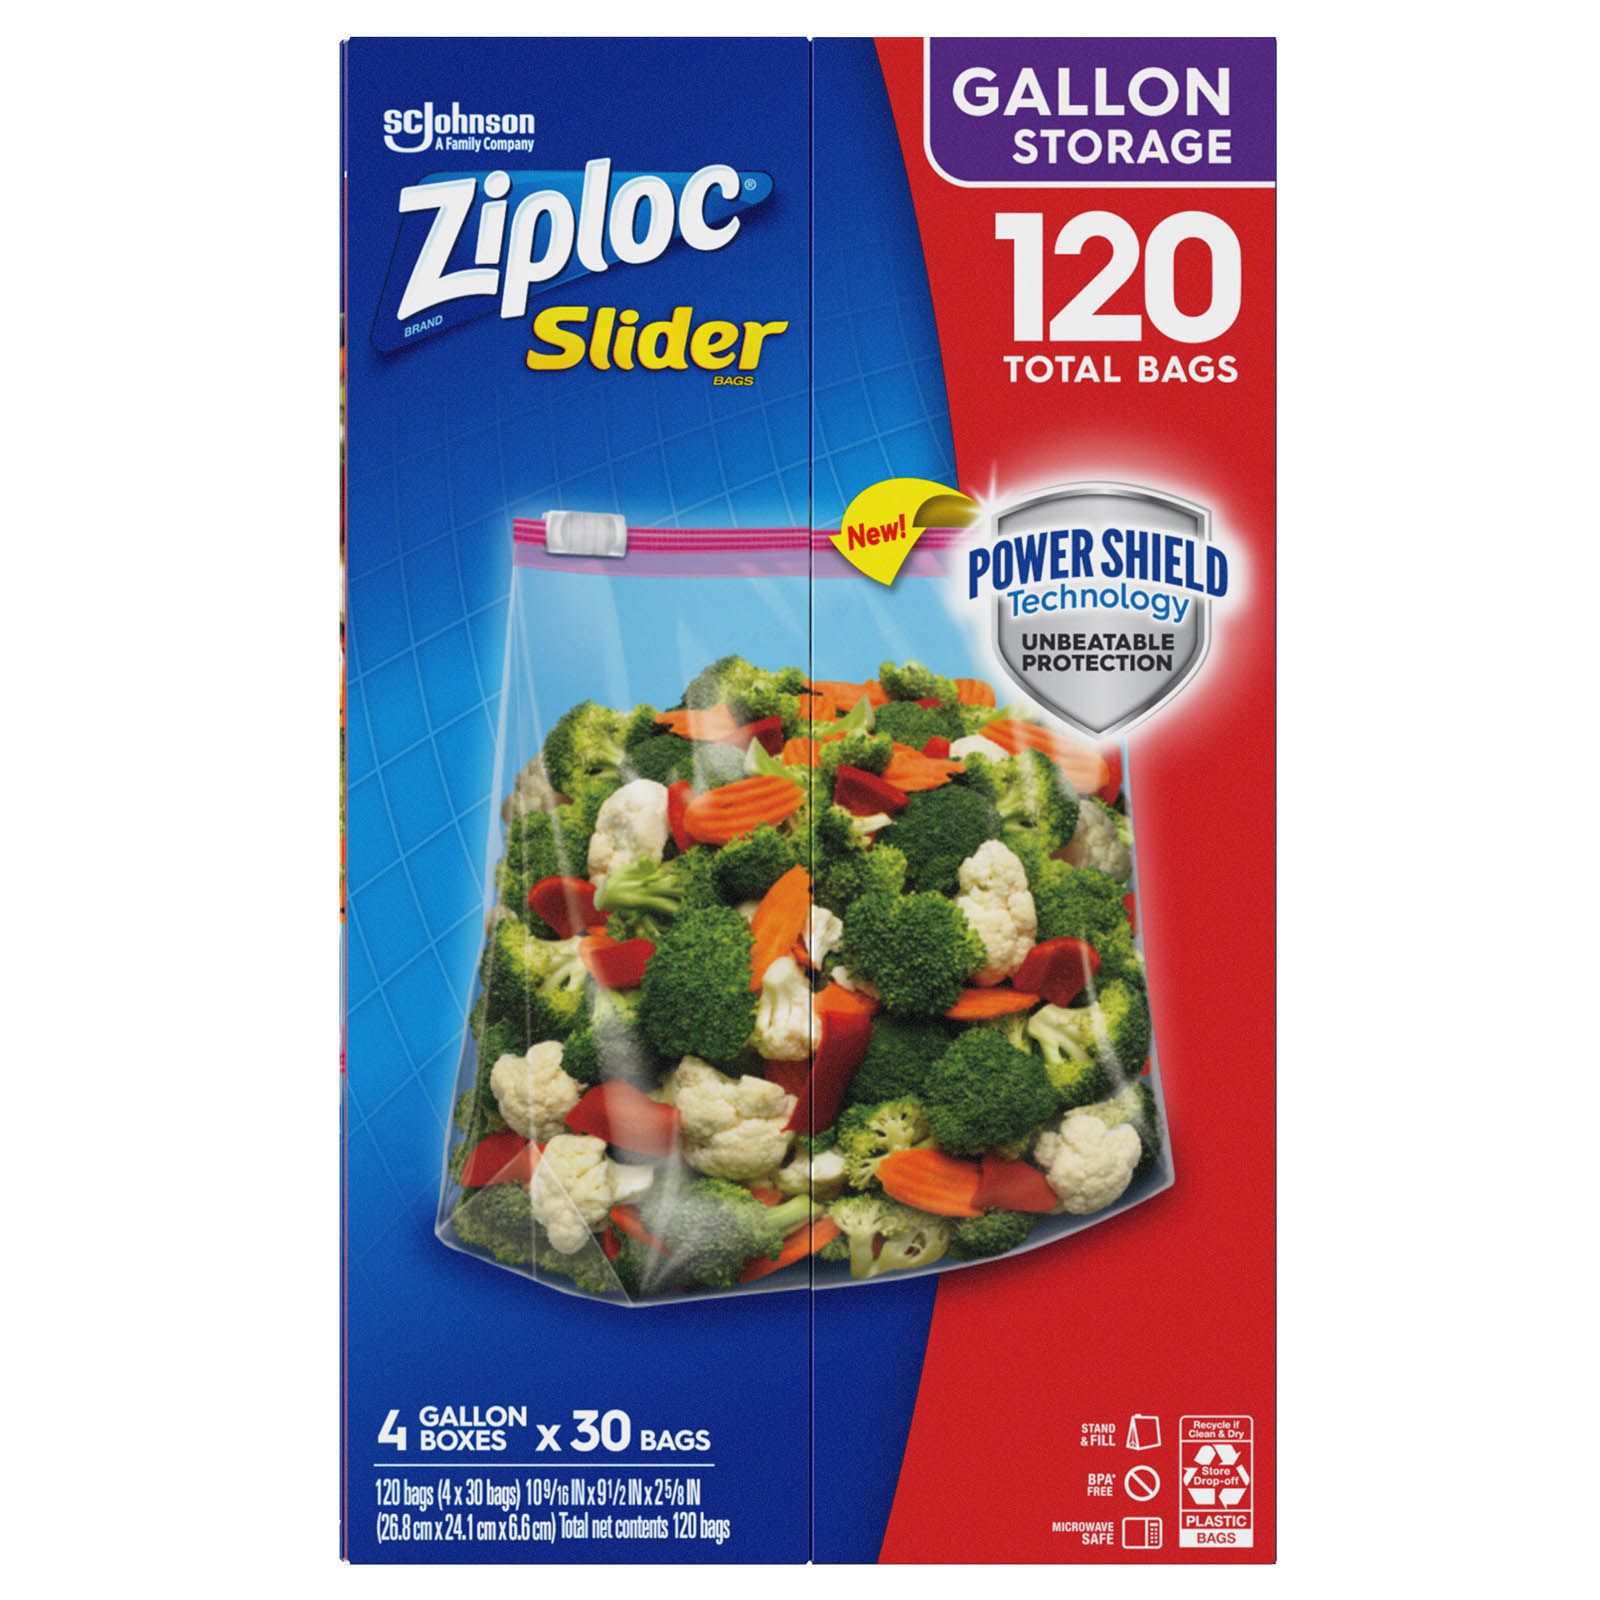 Ziploc® Brand Quart Freezer Bags Mega Pack, 75 ct - Baker's